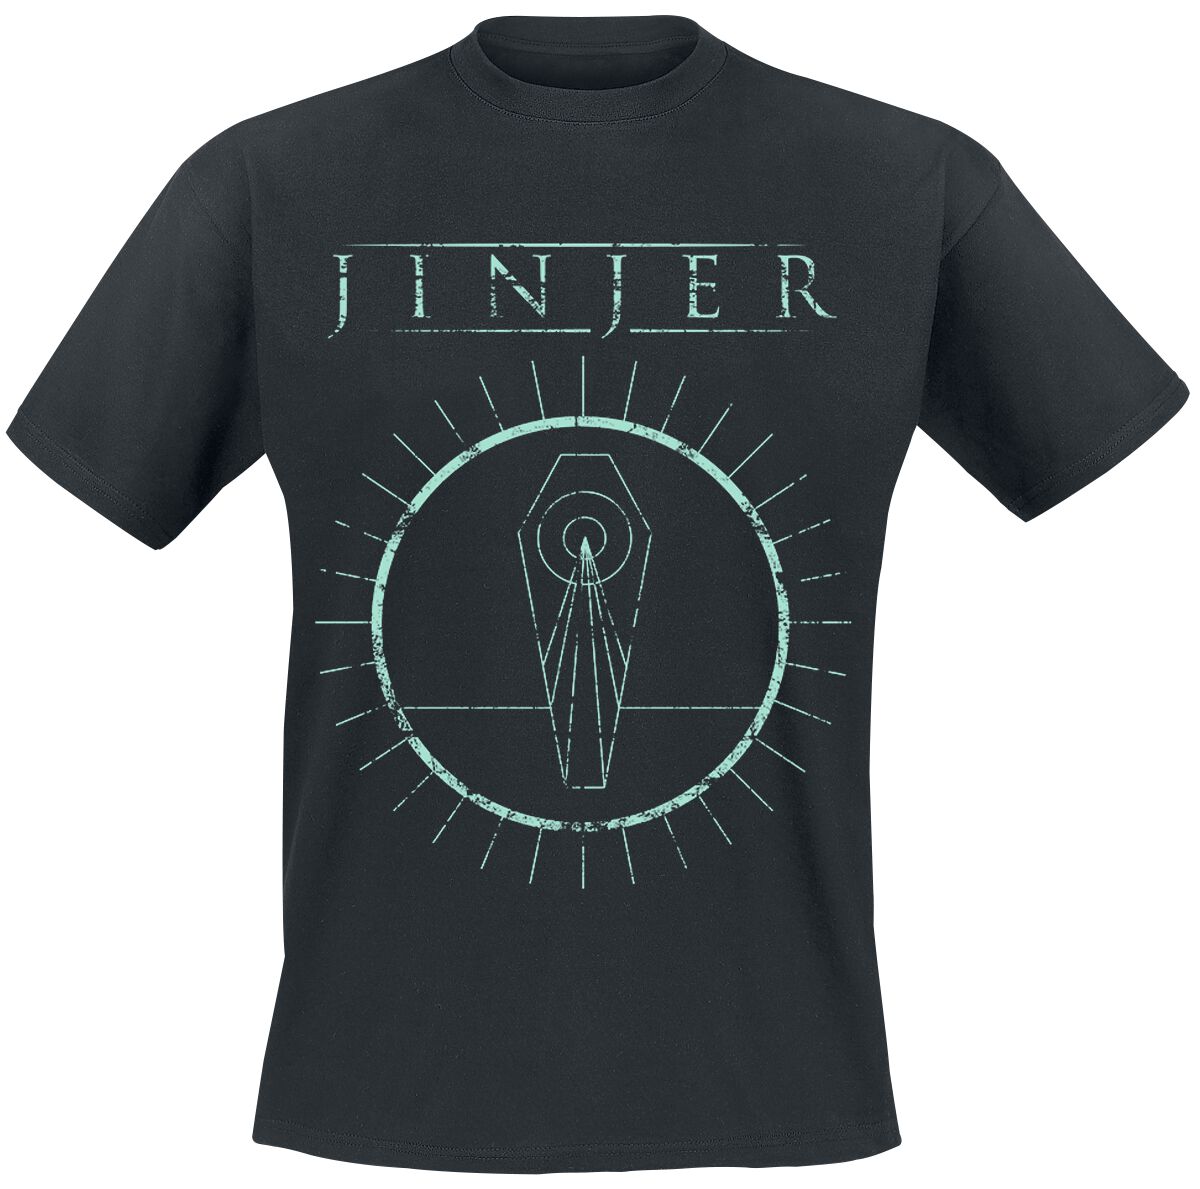 Image of Jinjer Pausing Death T-Shirt schwarz